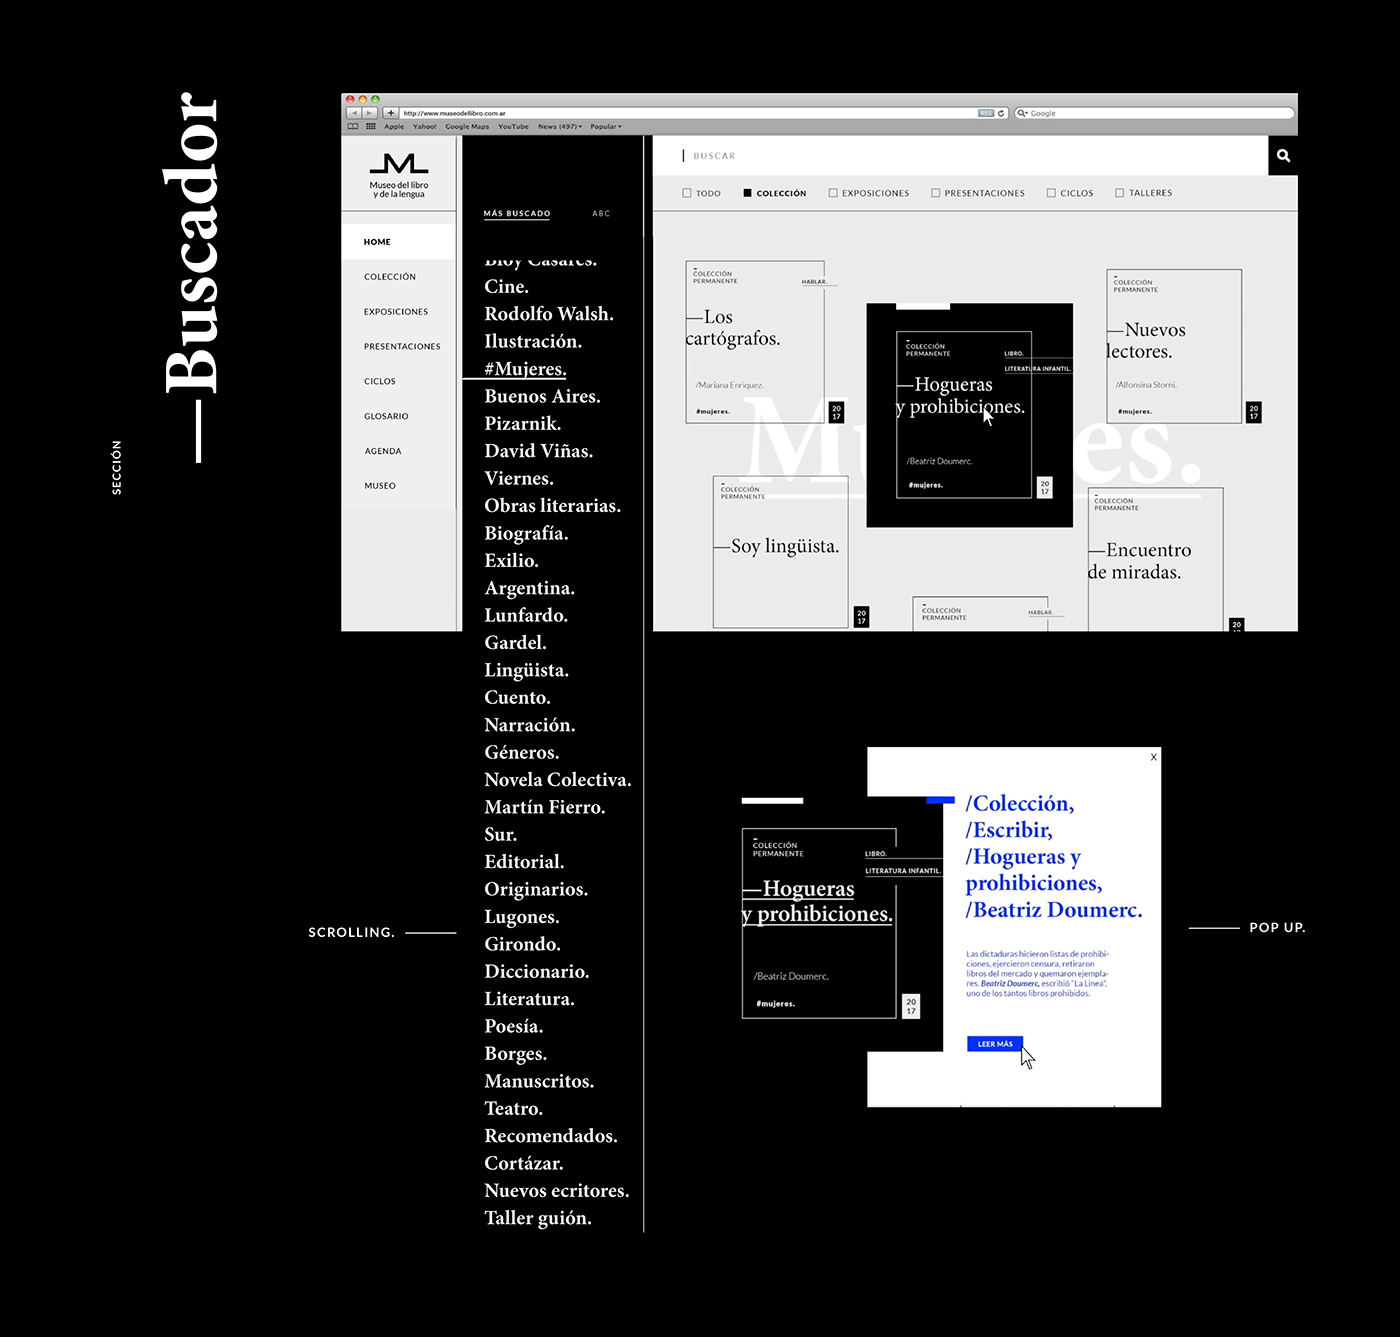 Web museo digital editorial UI ux Gabriele fadu design